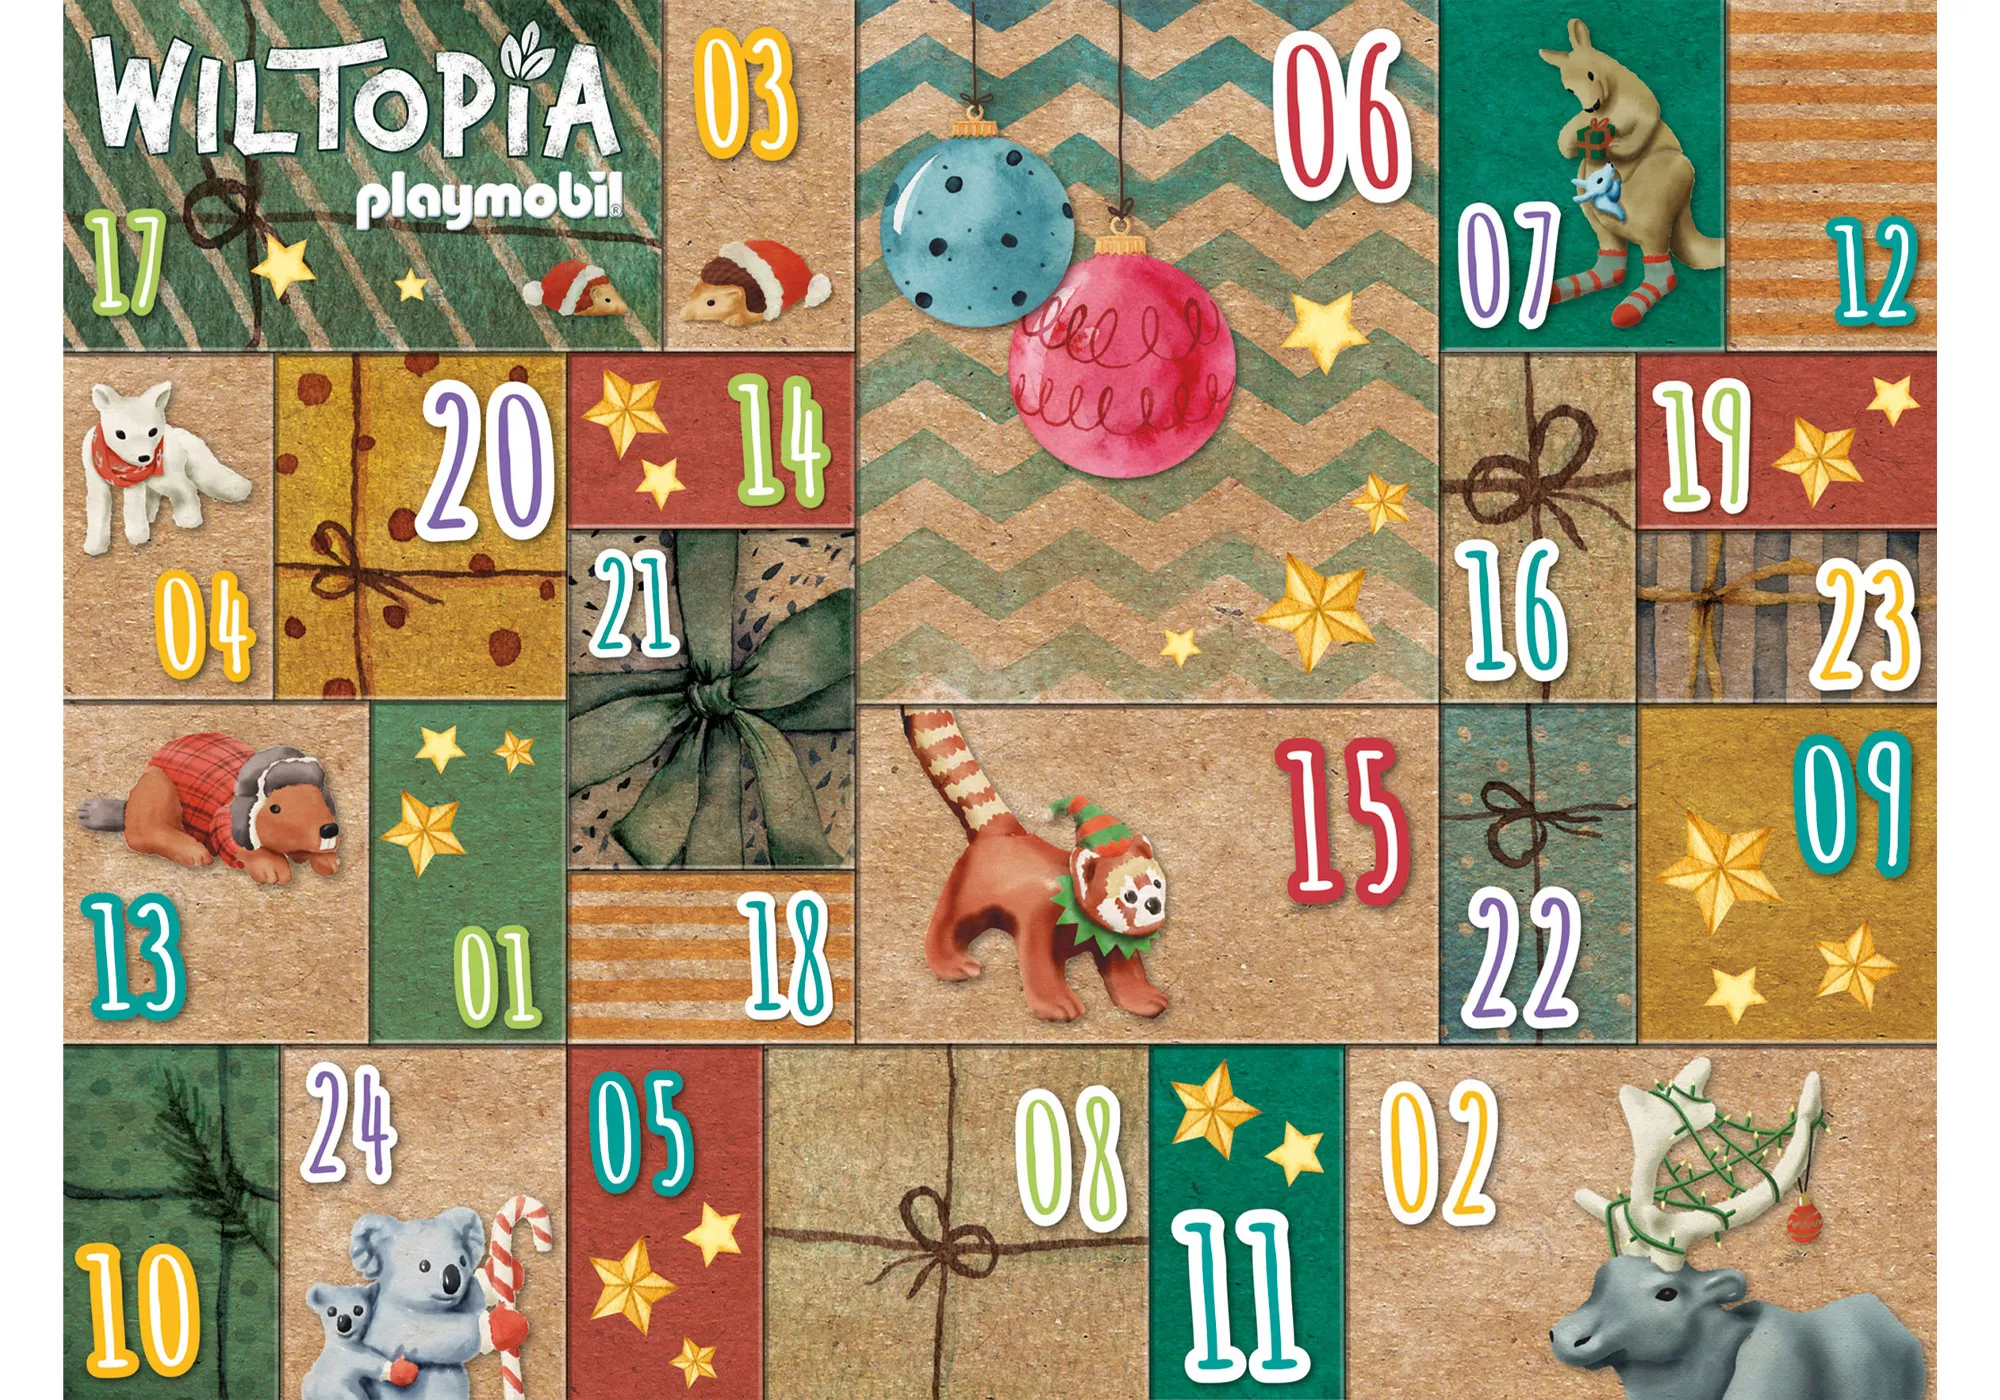 PLAYMOBIL 71006 Wiltopia - DIY Adventskalender: Tierische Weltreise